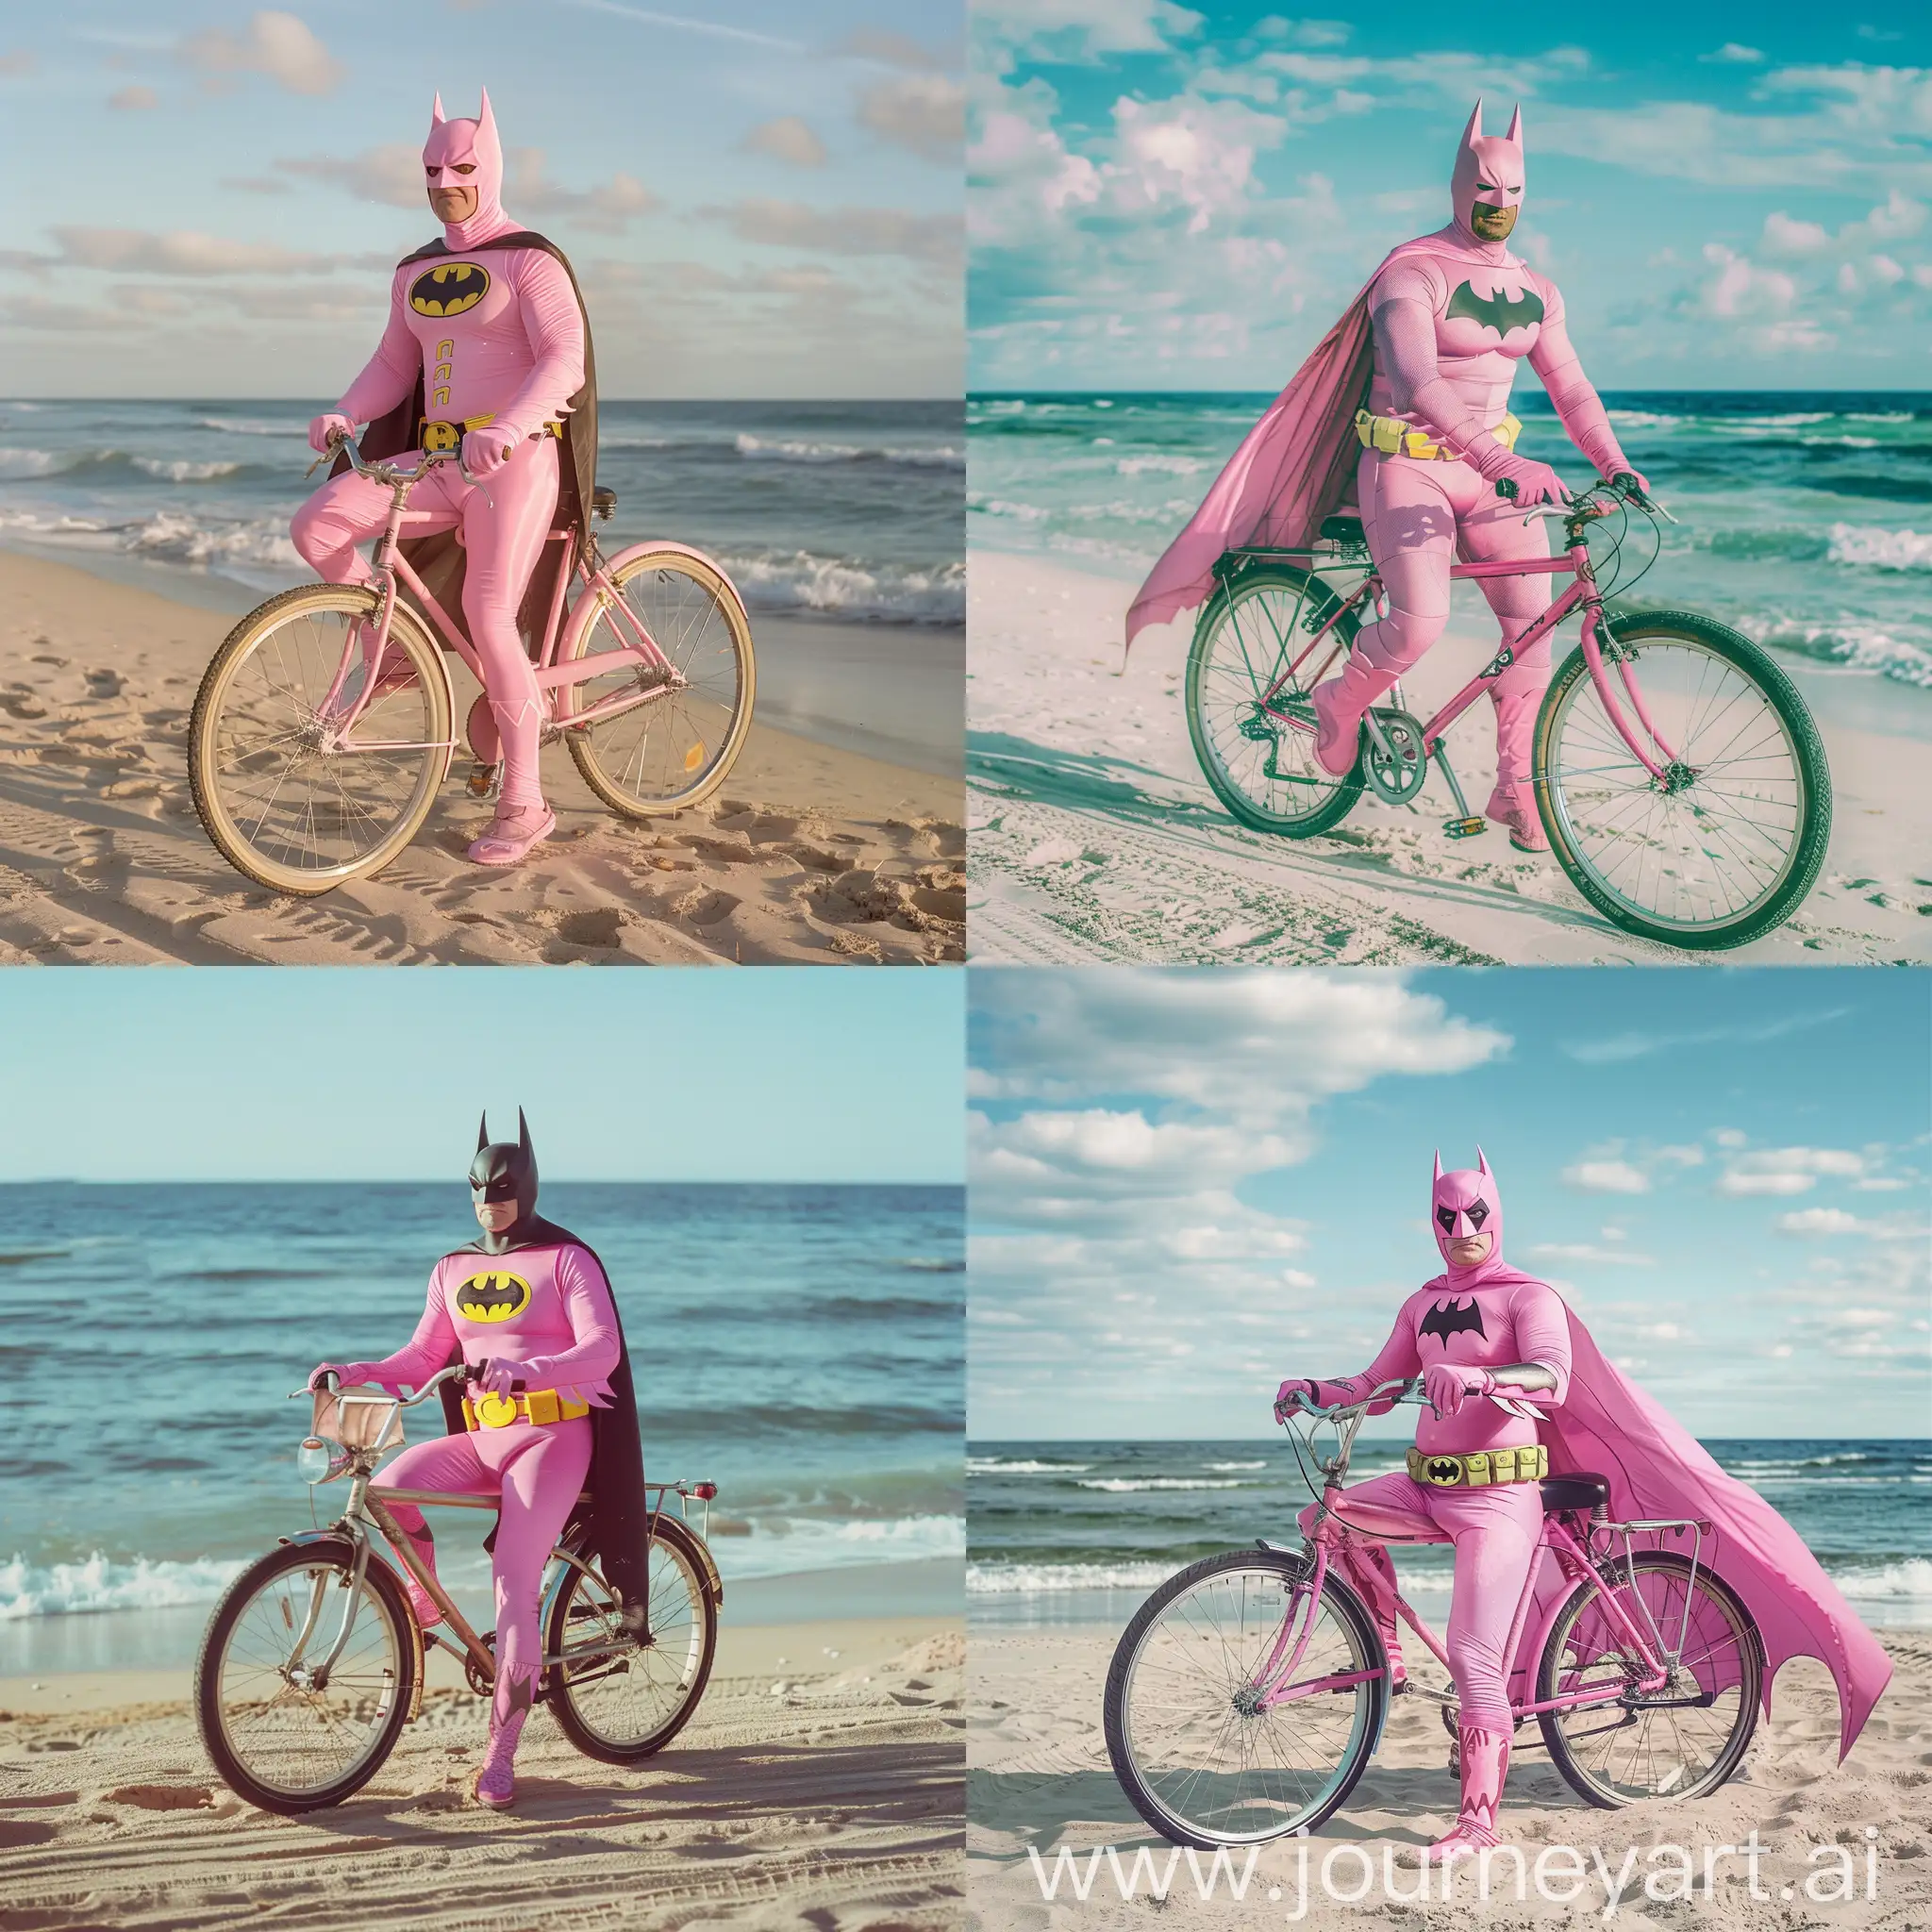 Dynamic-Beach-Scene-with-Pink-Batman-Cycling